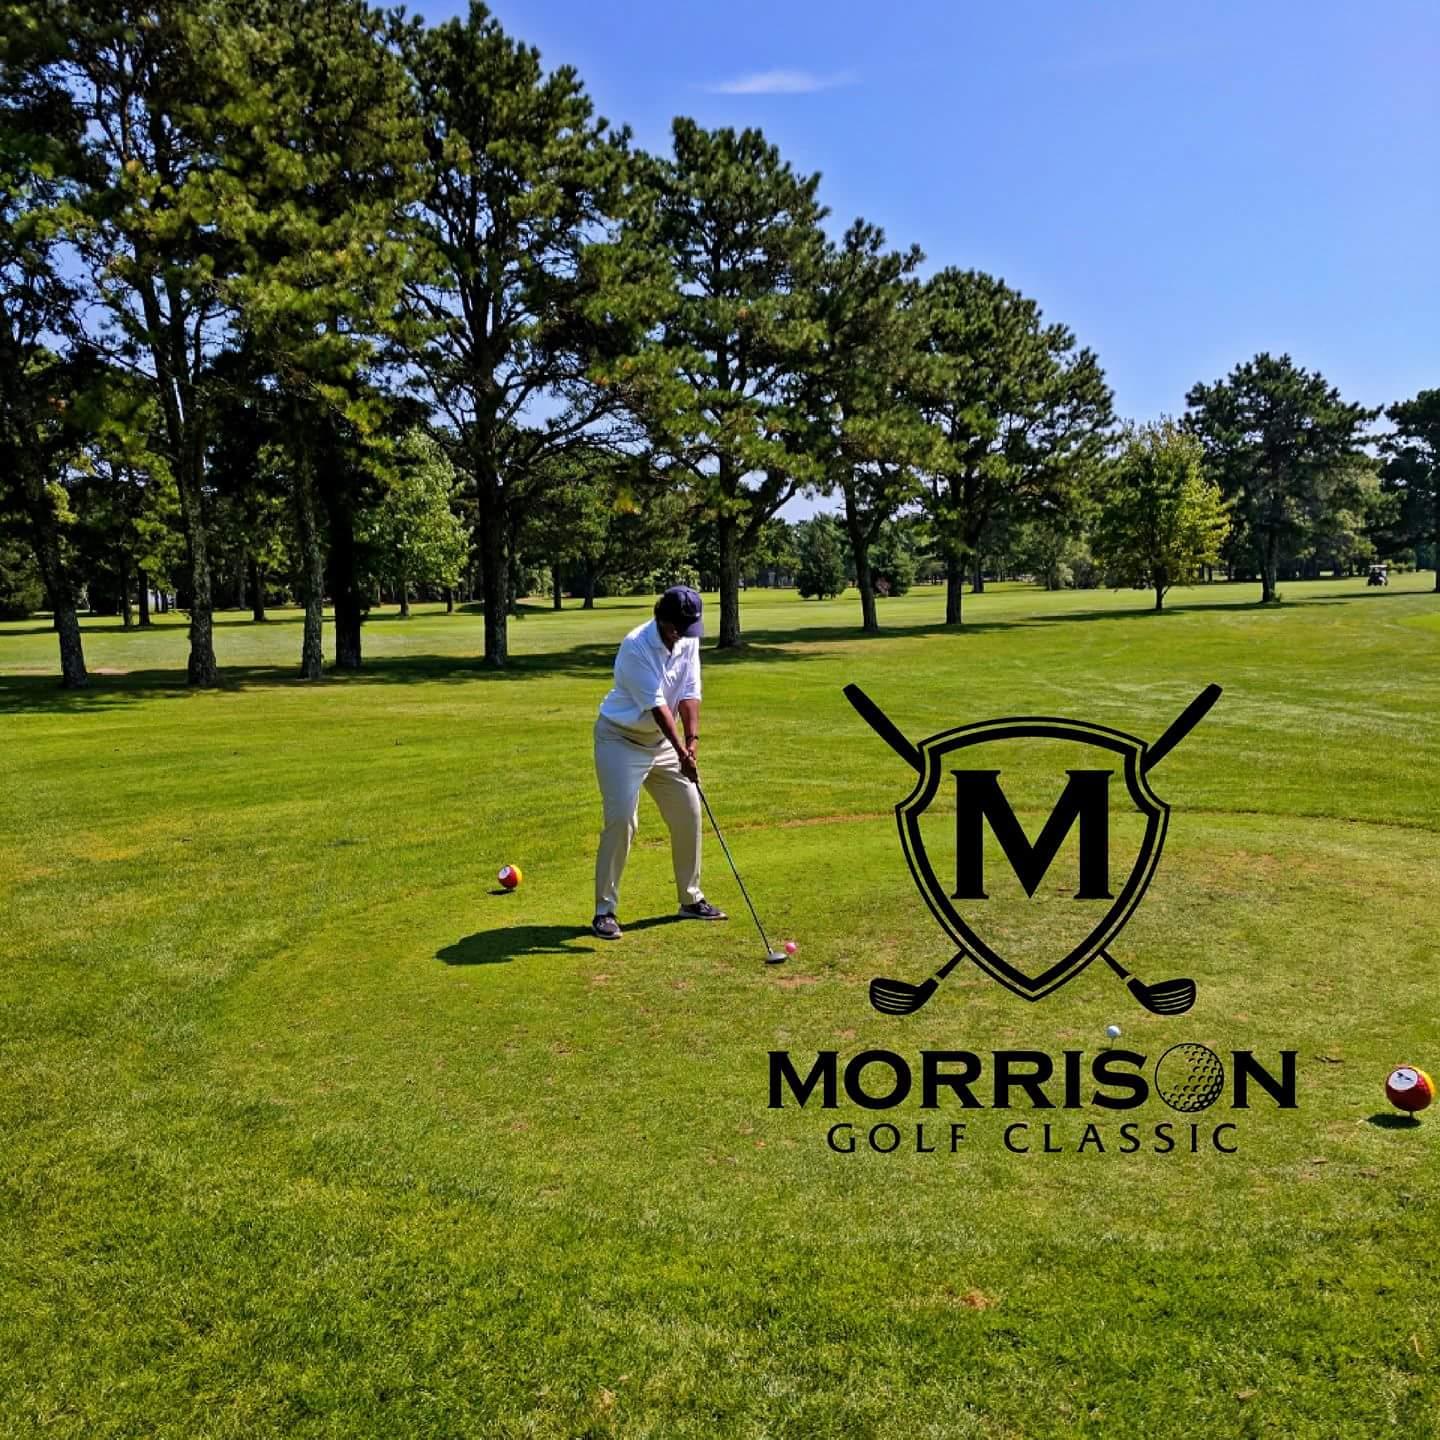 18th Annual Morrison Golf Classic